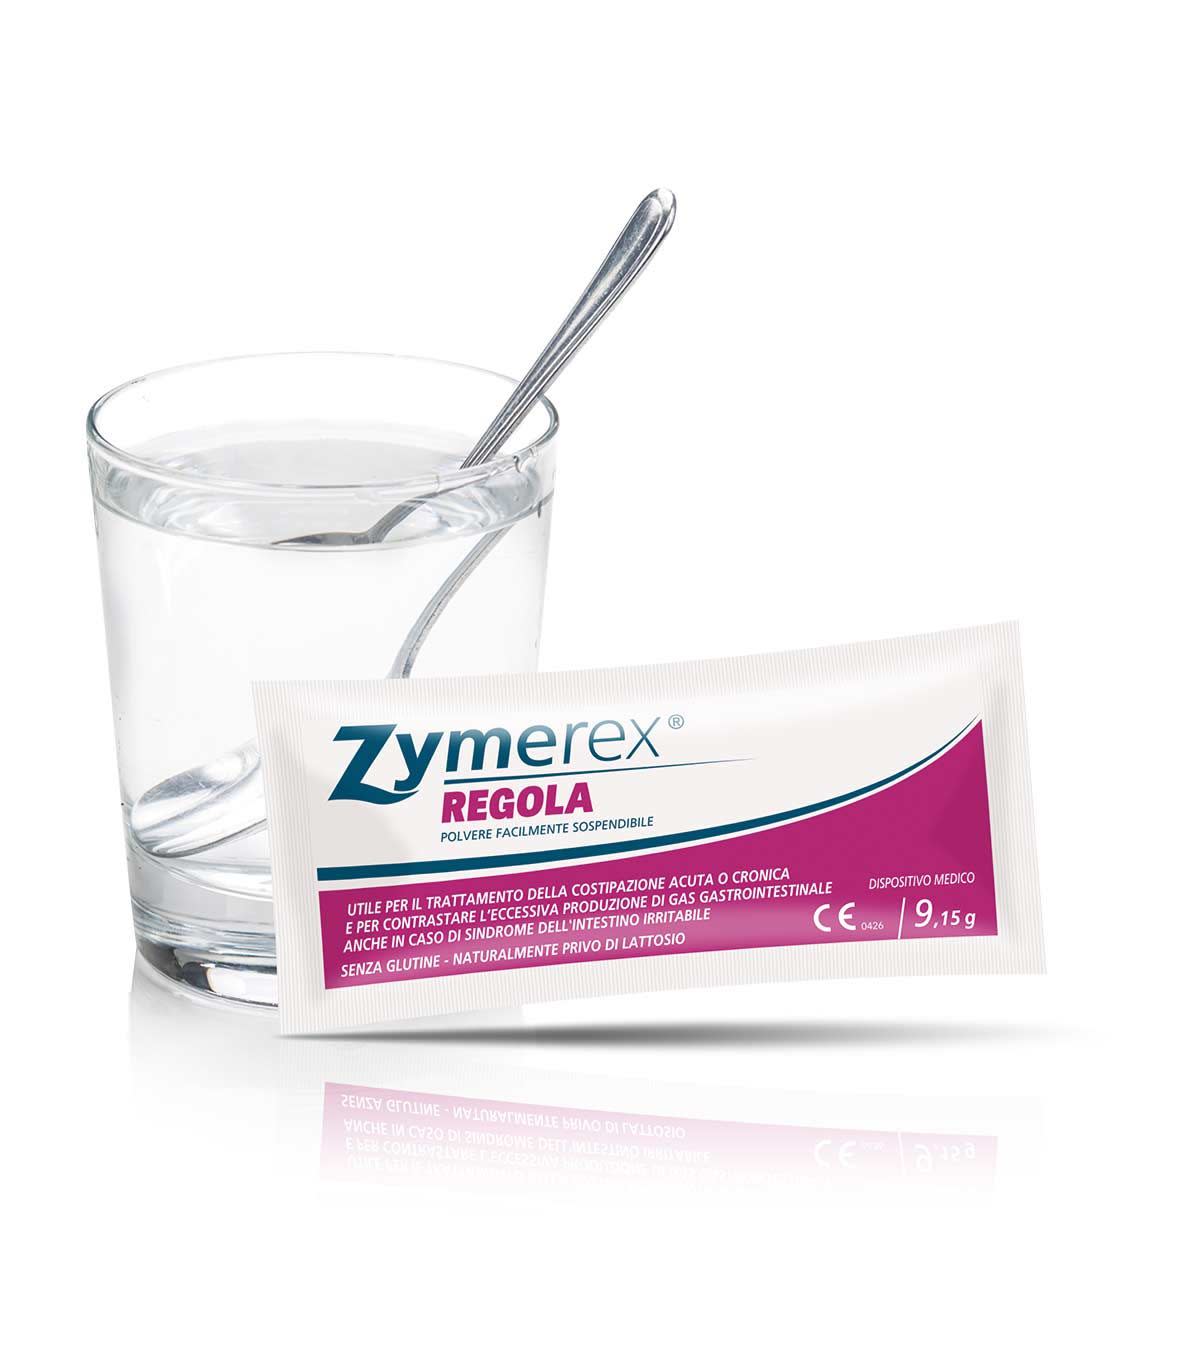 981047133 - Zymerex Regola Integratore regolarità intestinale 20 buste - 4737120_3.jpg